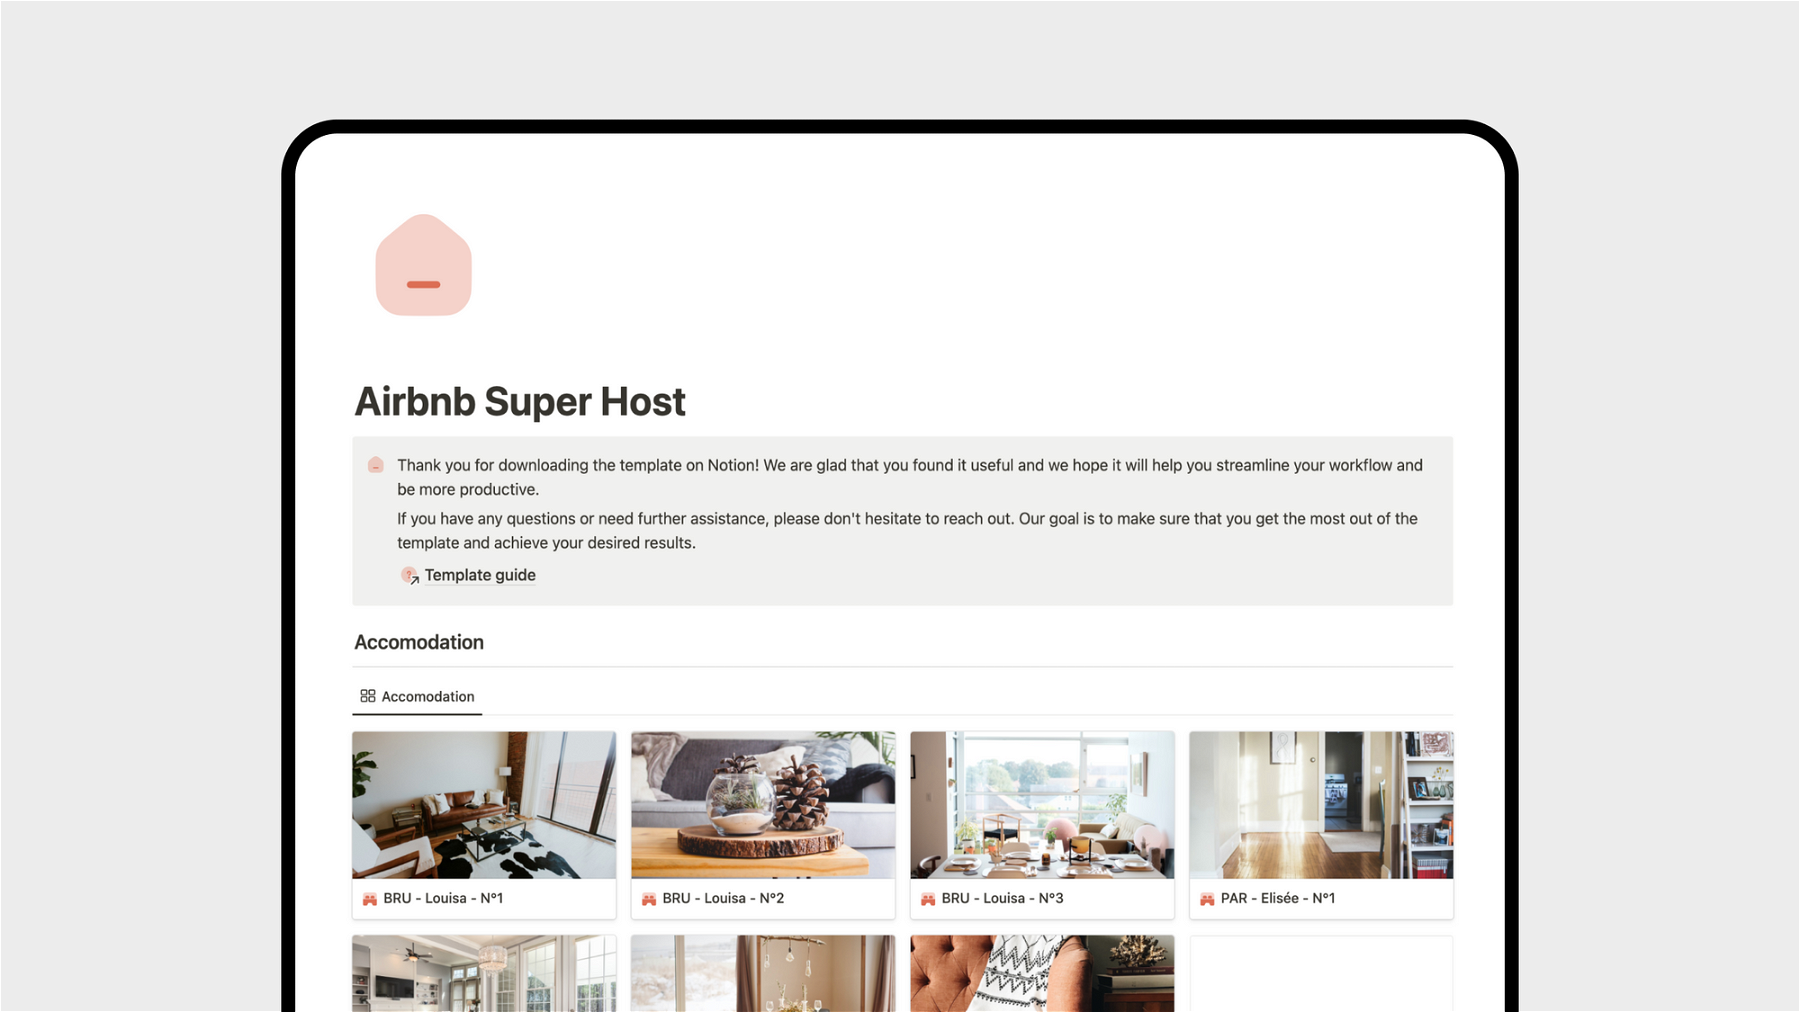 Airbnb Super Host